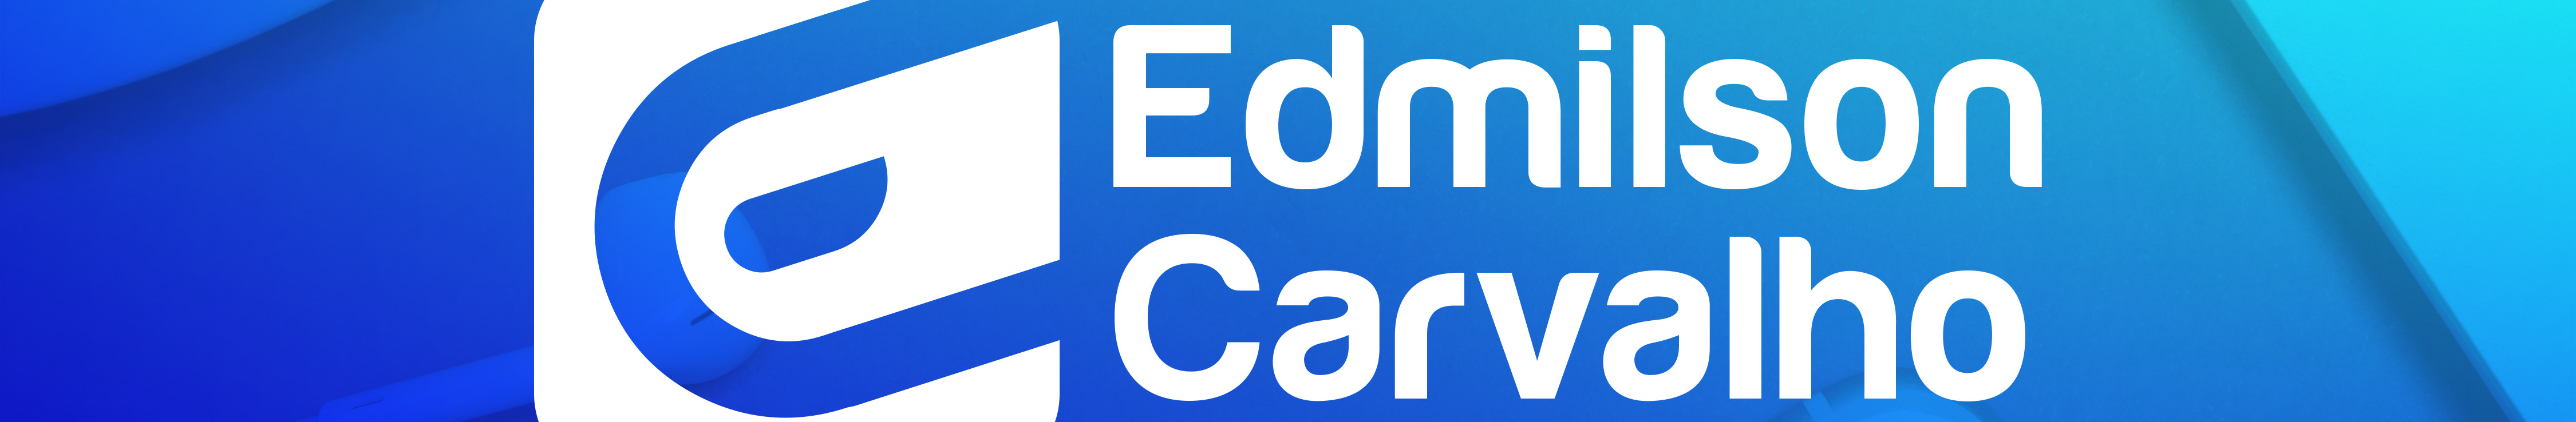 Edmilson Carvalho's profile banner